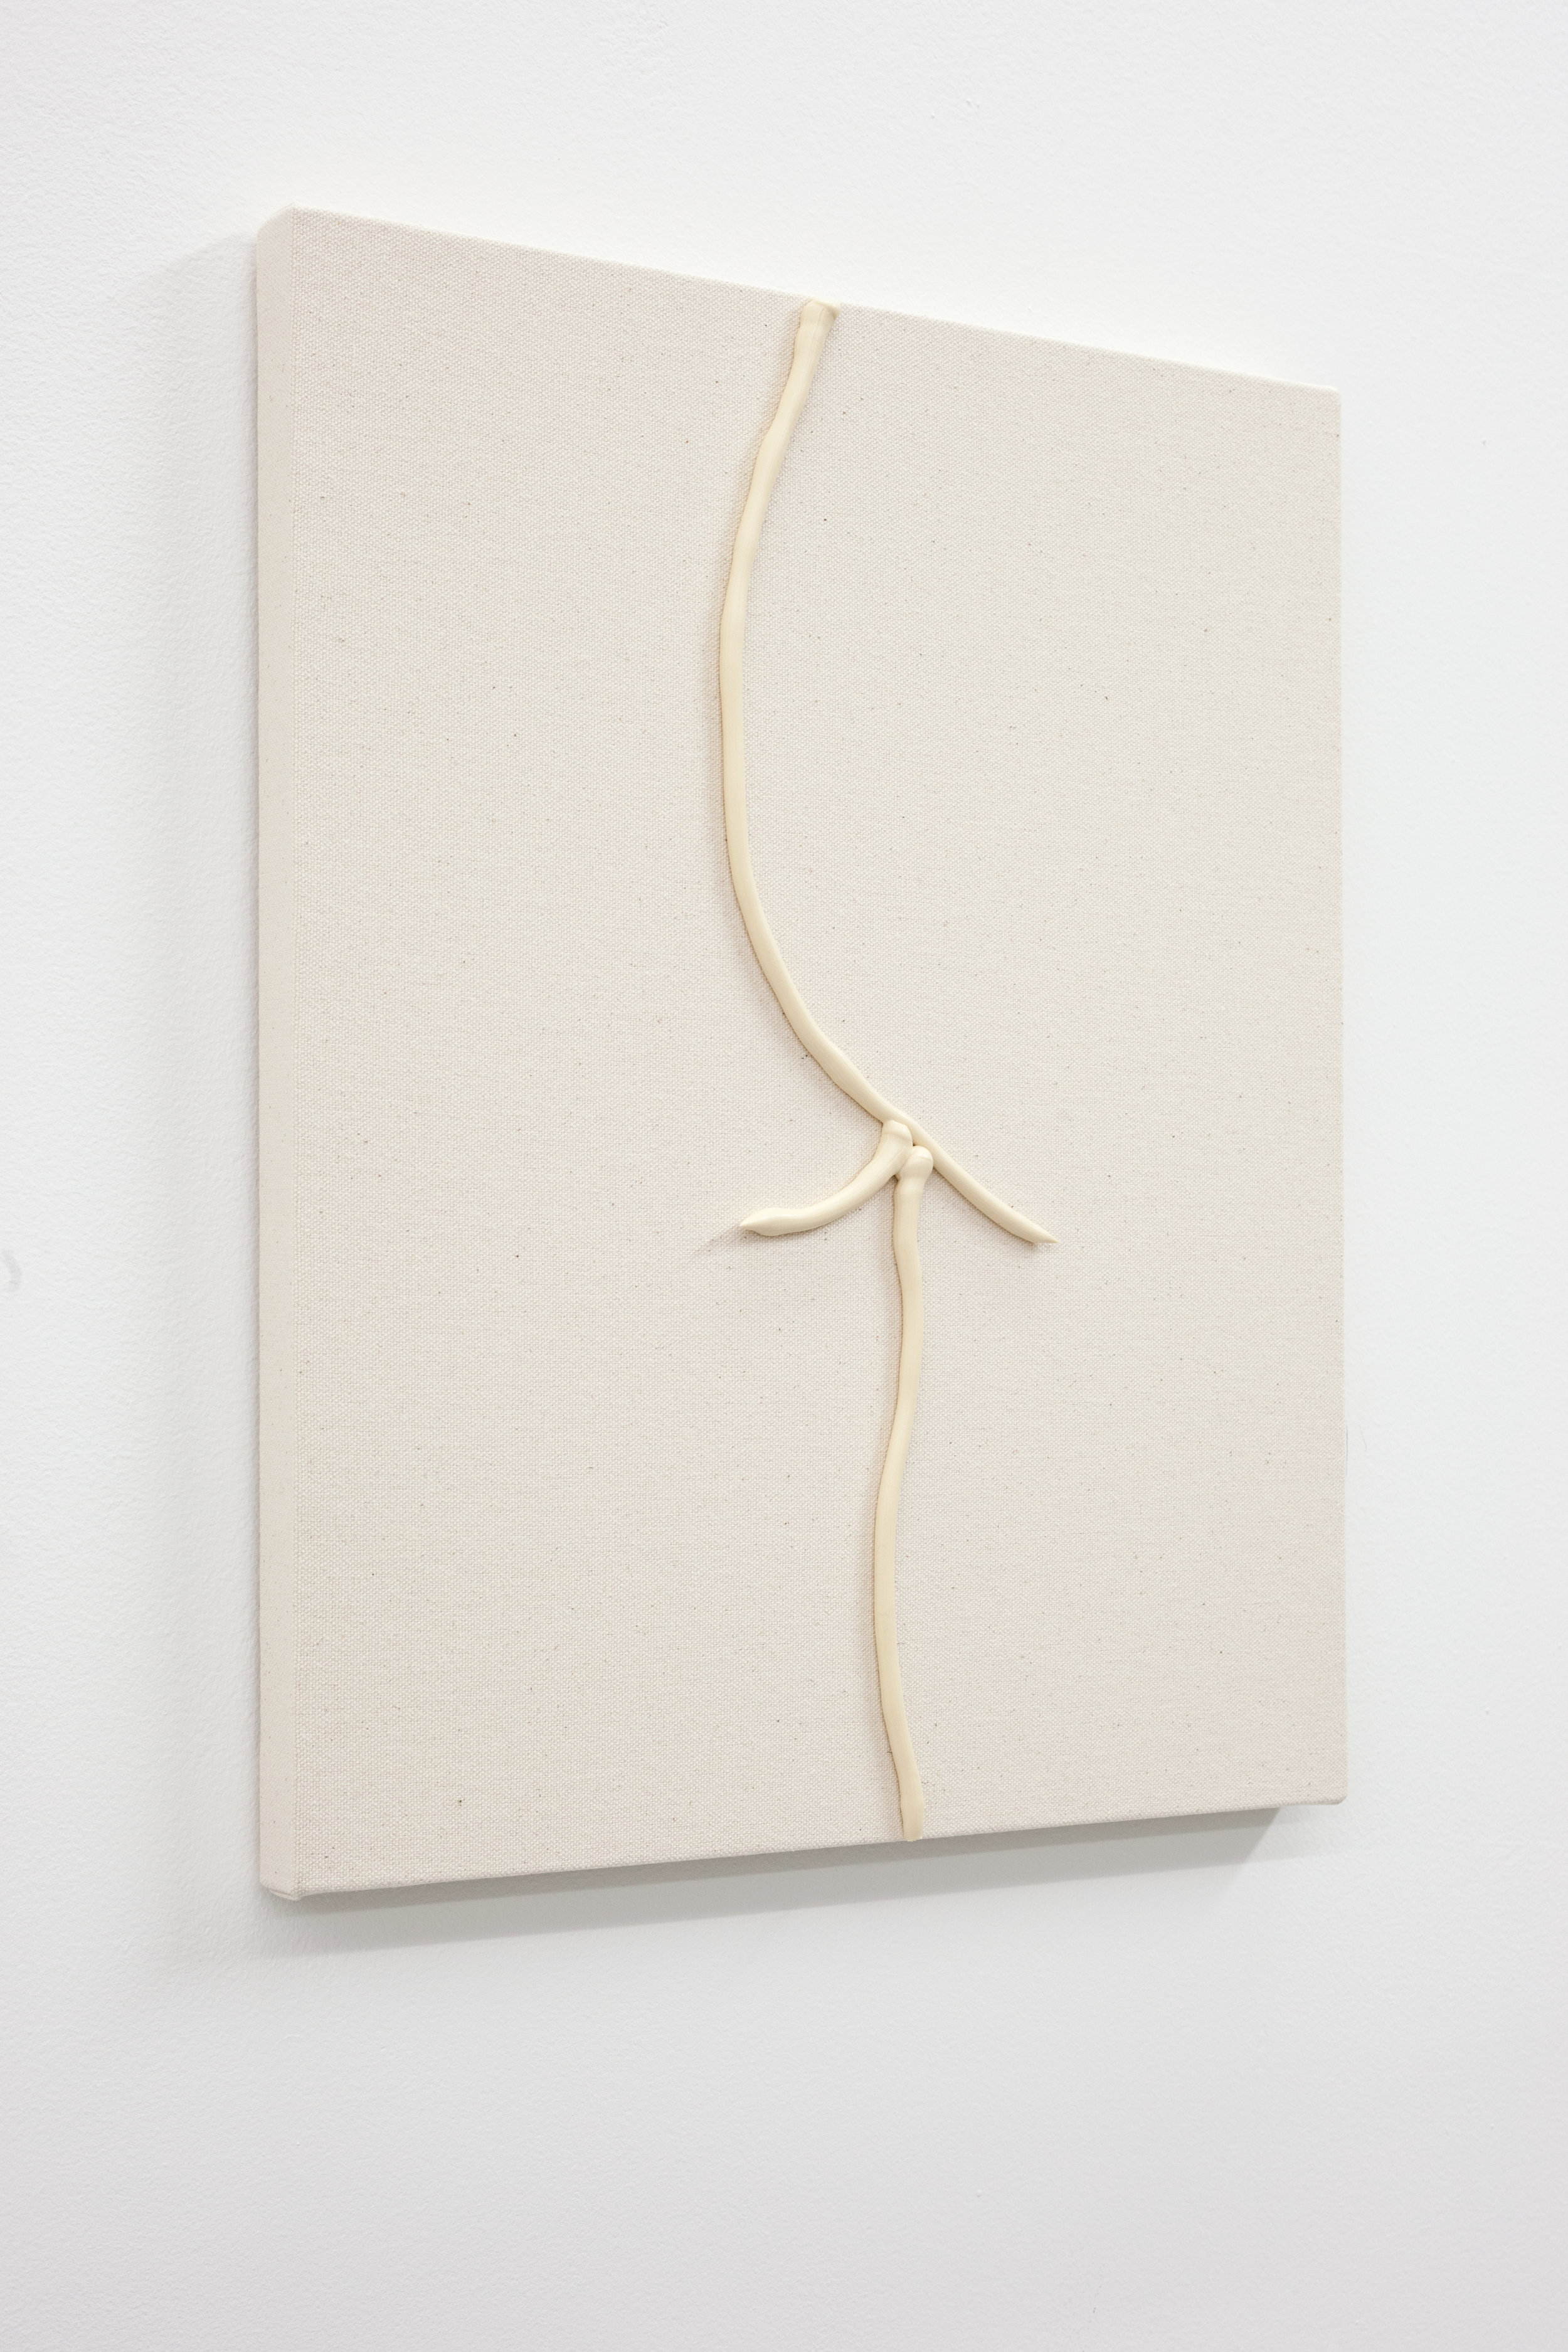  Omari Douglin,  Untitled (Butt Painting),  2019, Caulk on Raw Canvas, 16x13in 